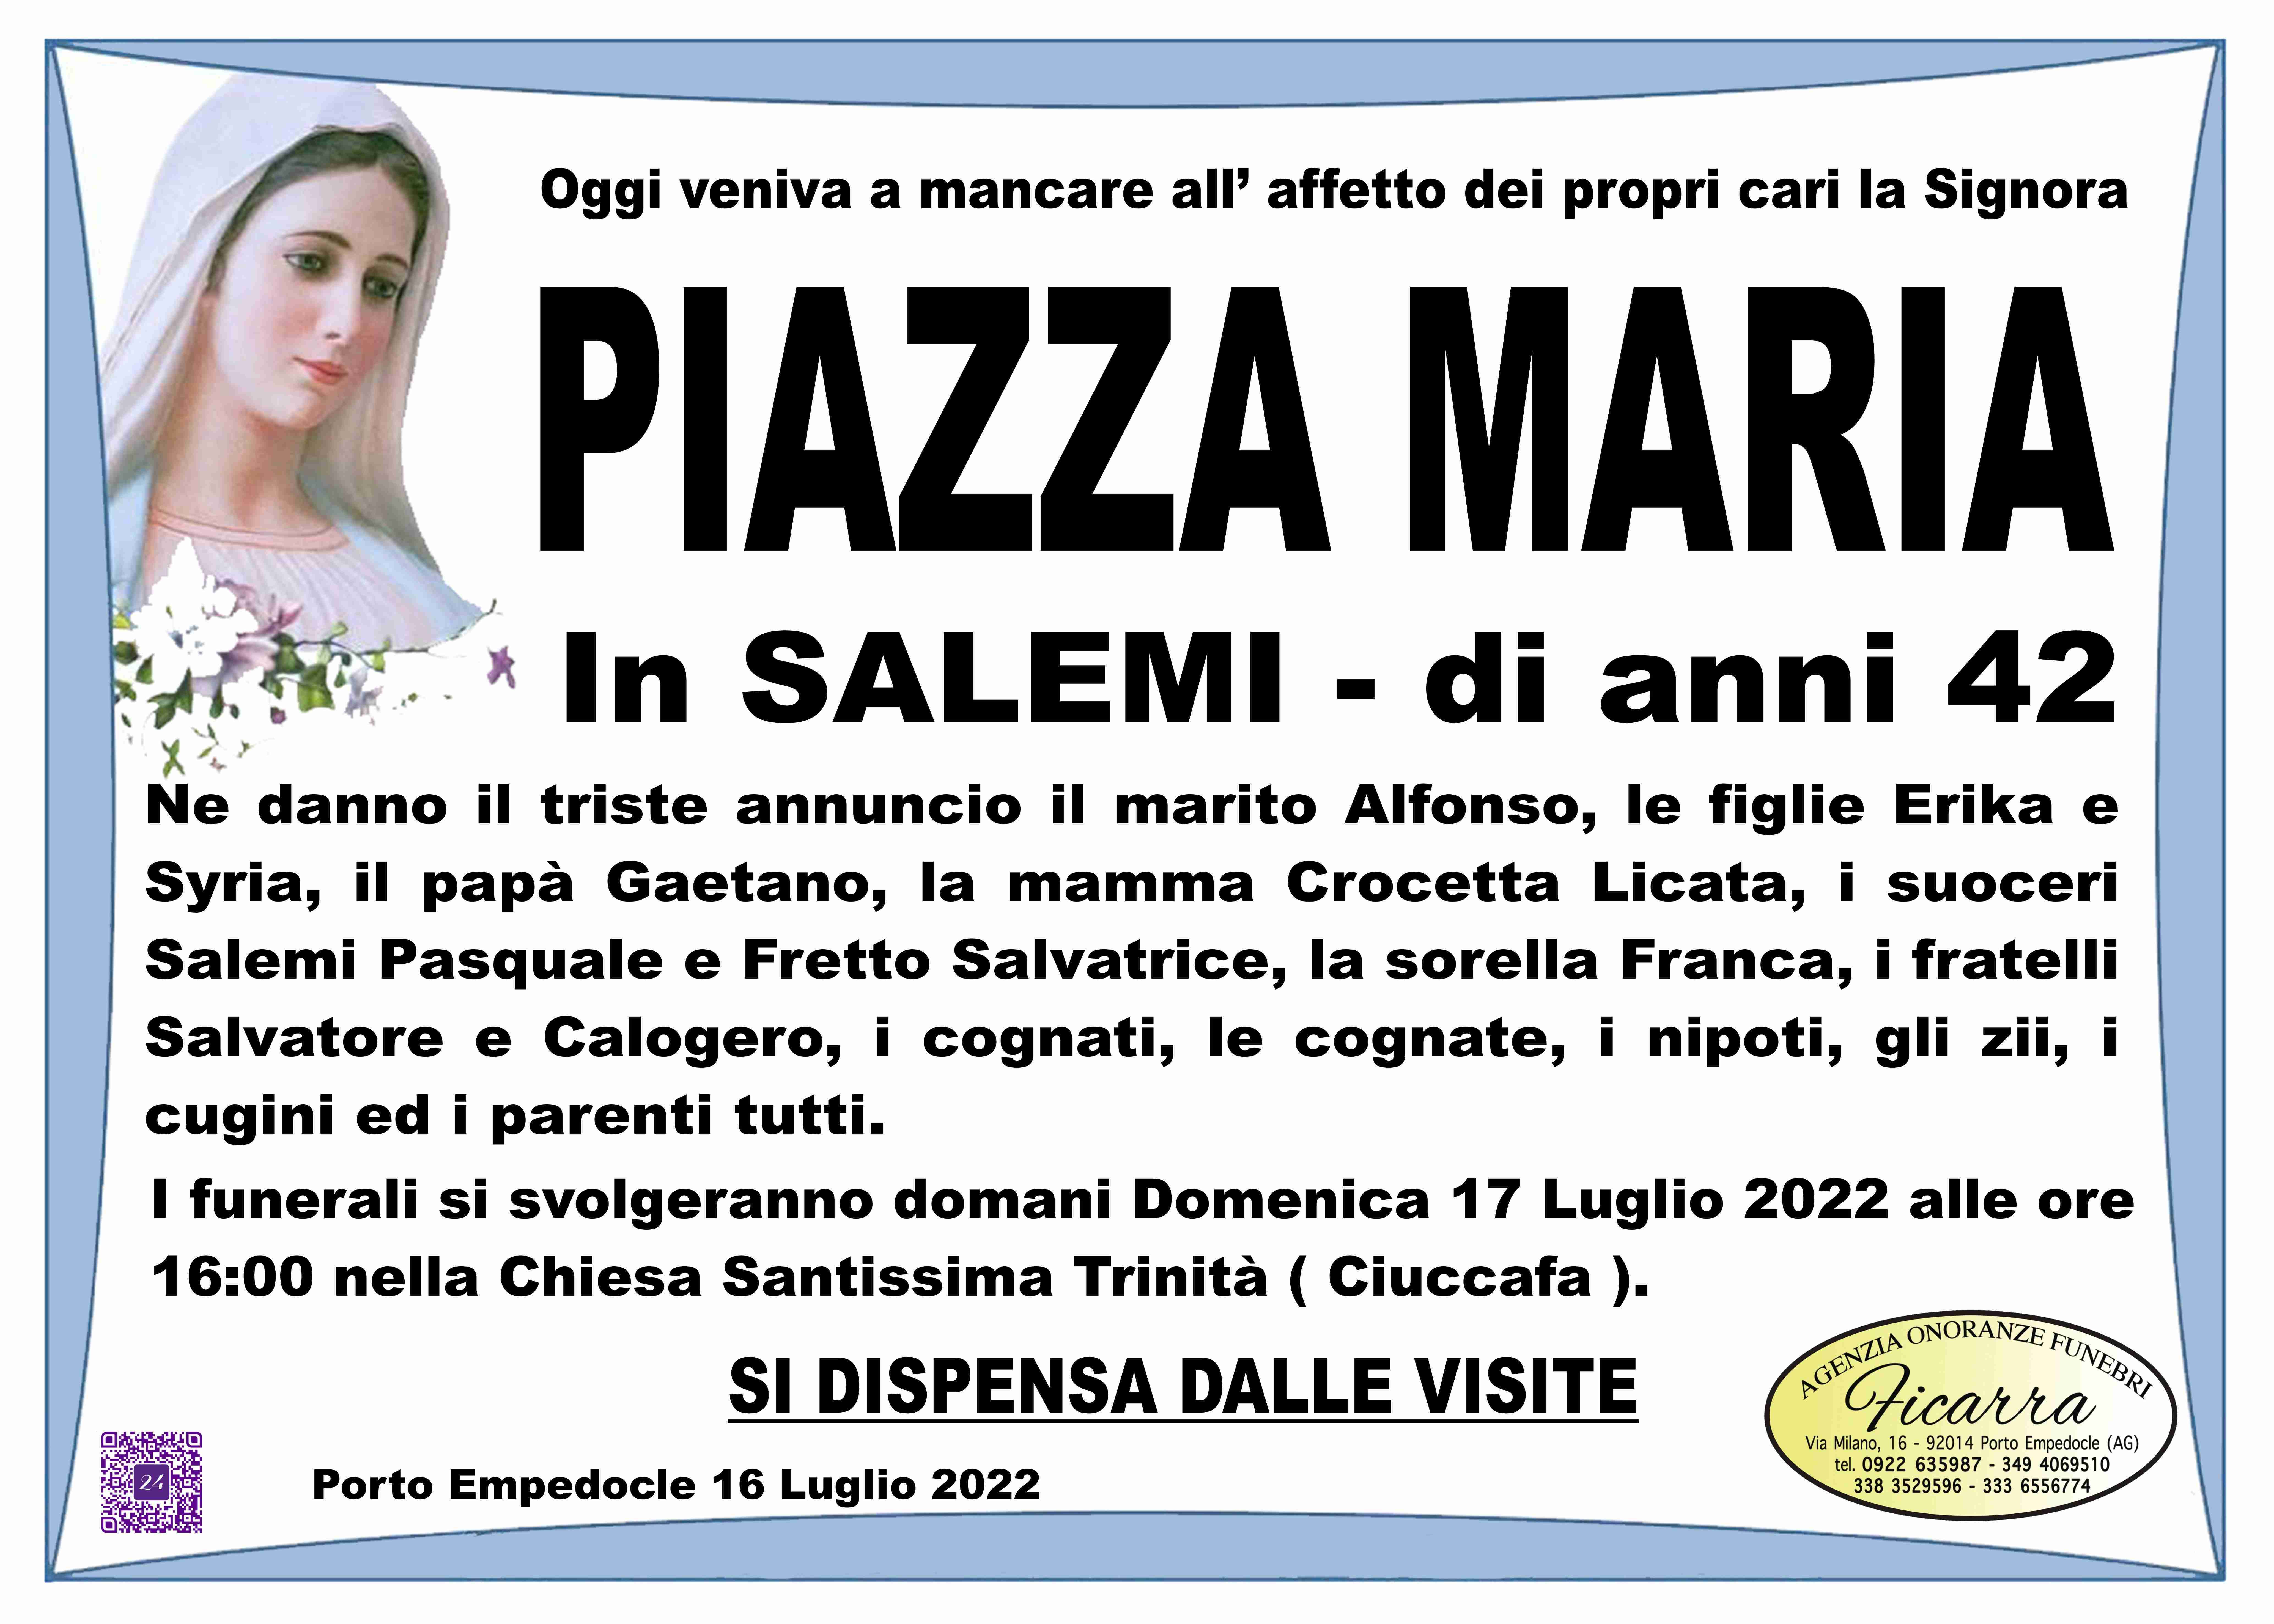 Maria Piazza